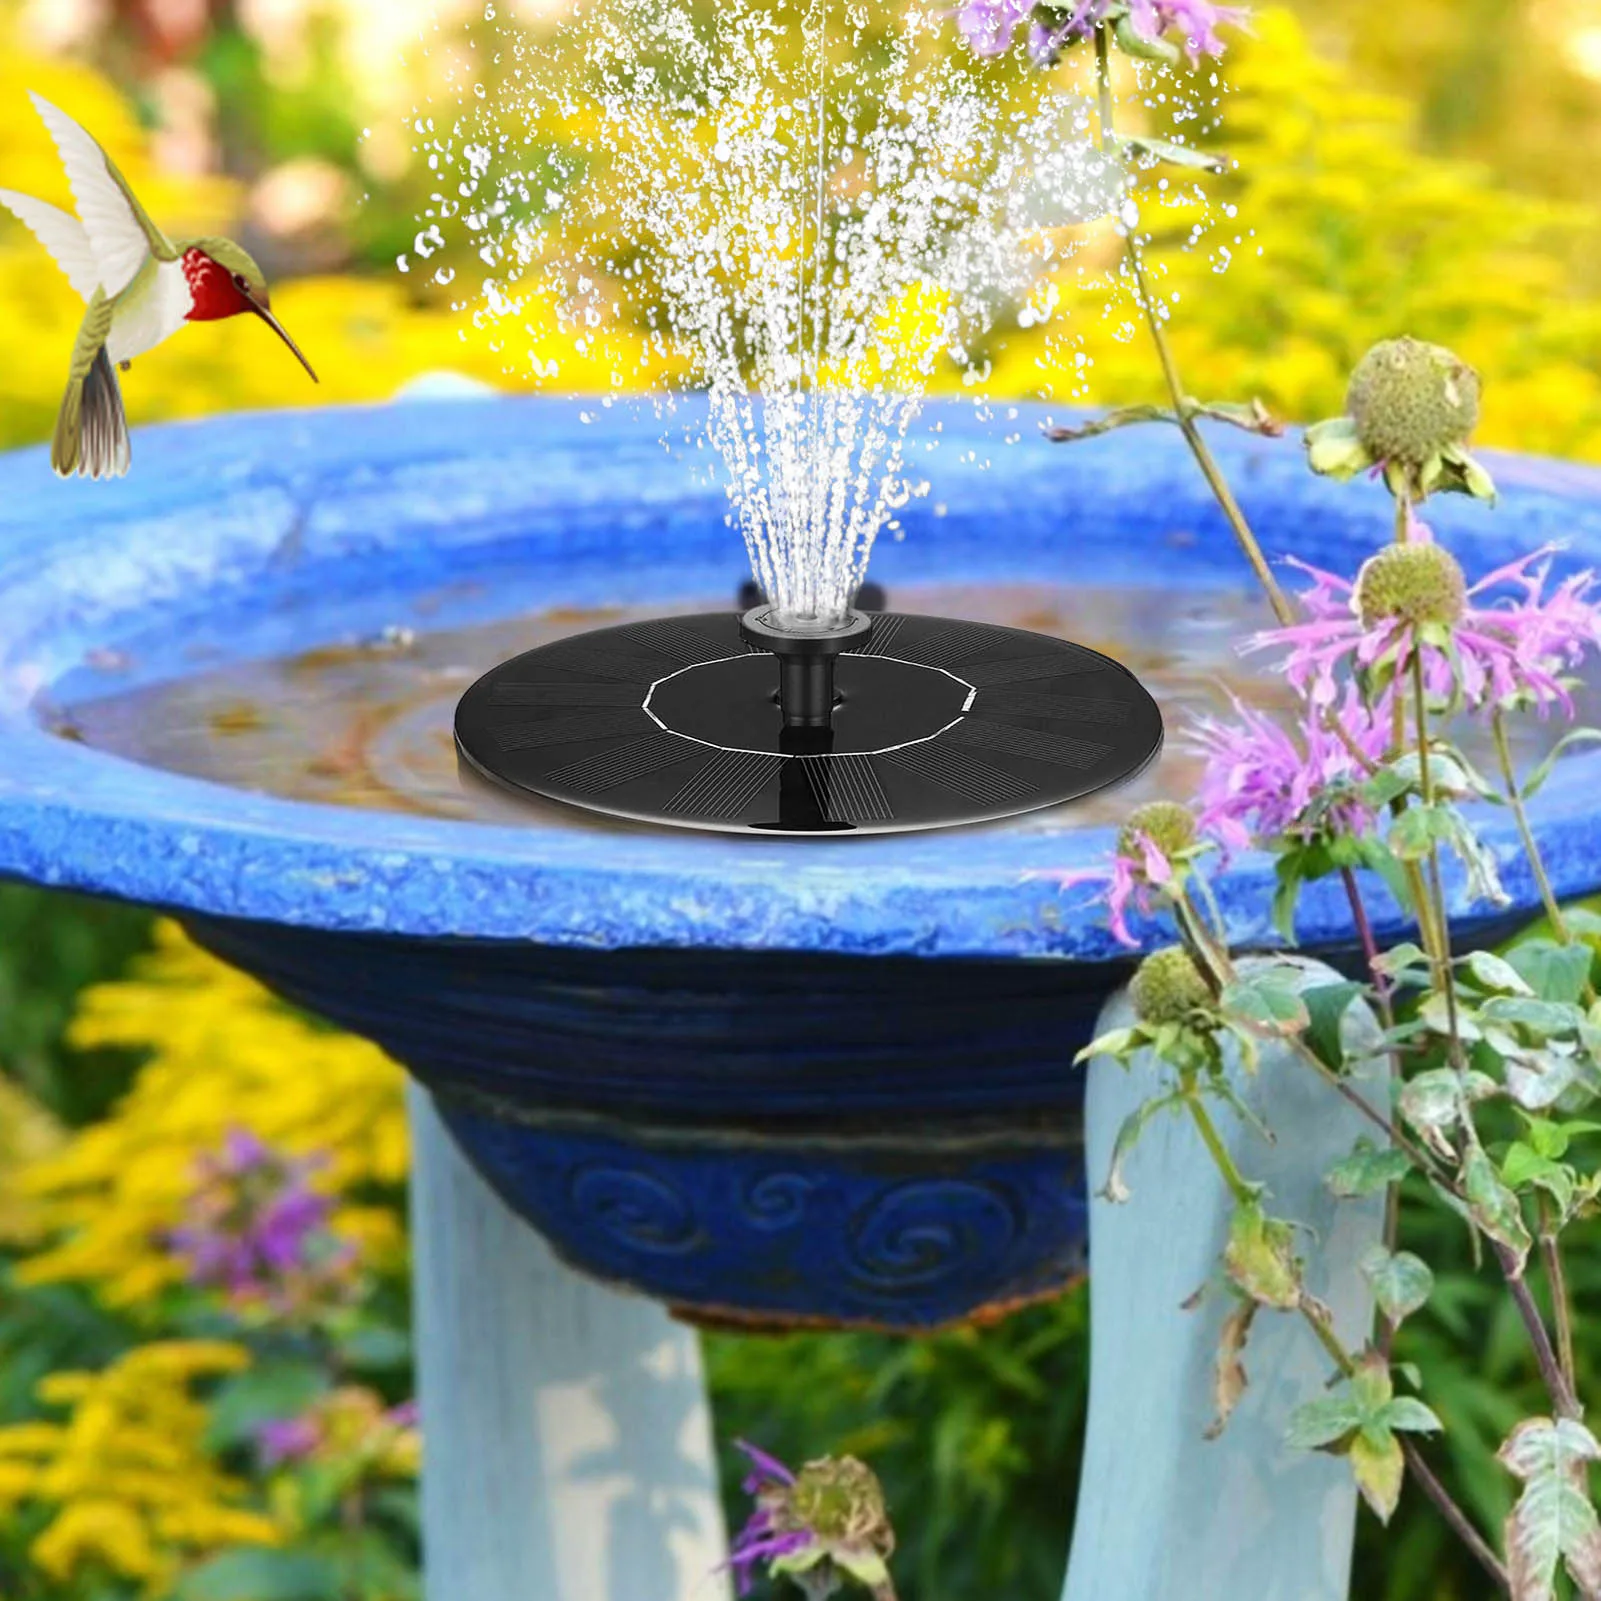 Floating Solar Powered Pond Garden Water Pump Fountain Pond For Bird Bath Tank~ 